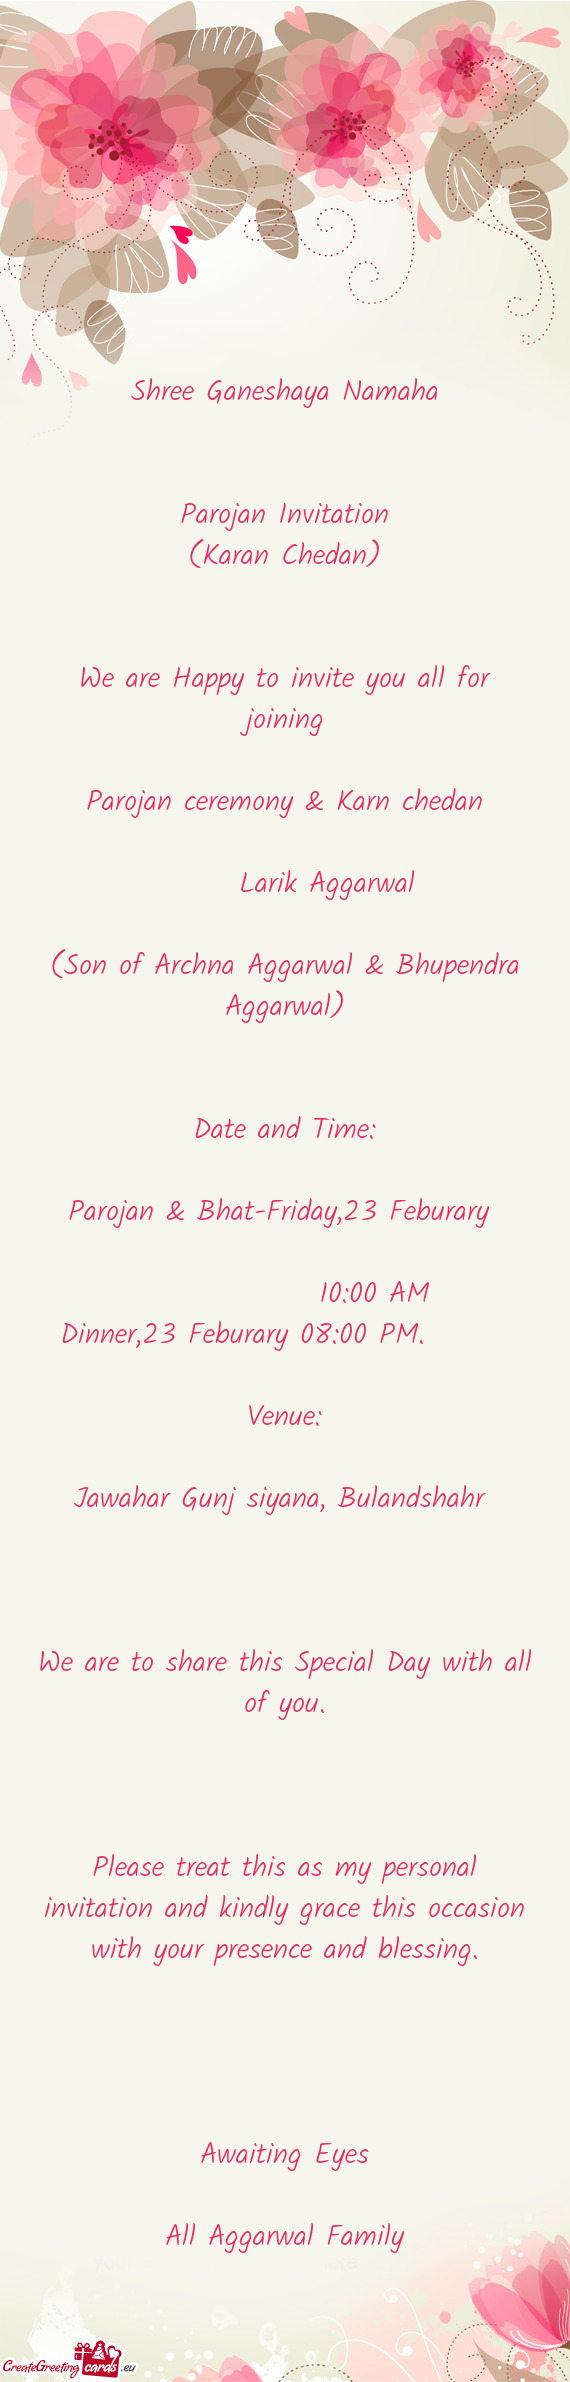 Parojan & Bhat-Friday,23 Feburary